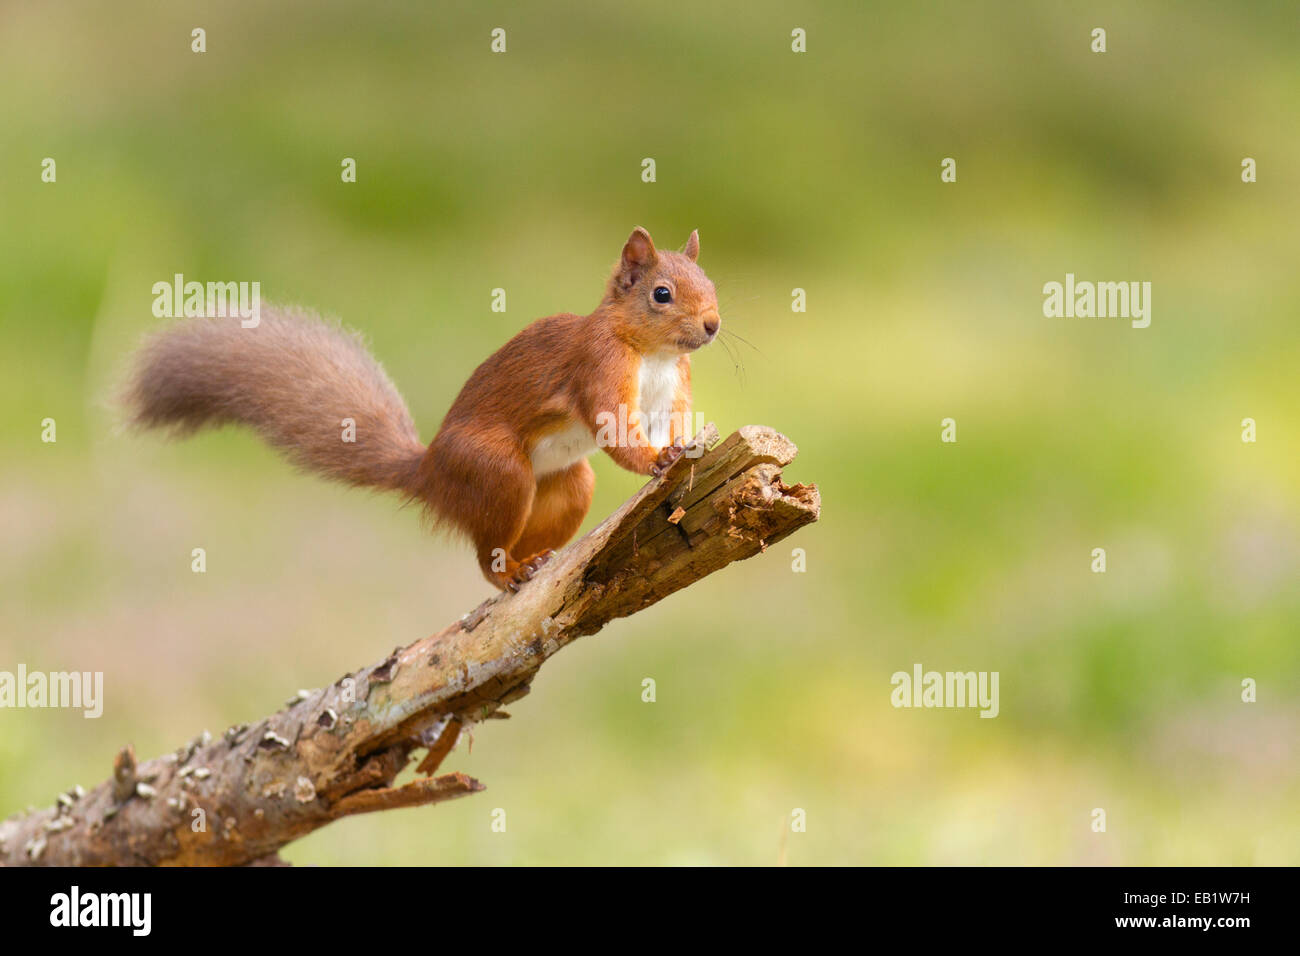 Red Squirrel (Sciurus vulgaris) stood on fallen pine branch Stock Photo